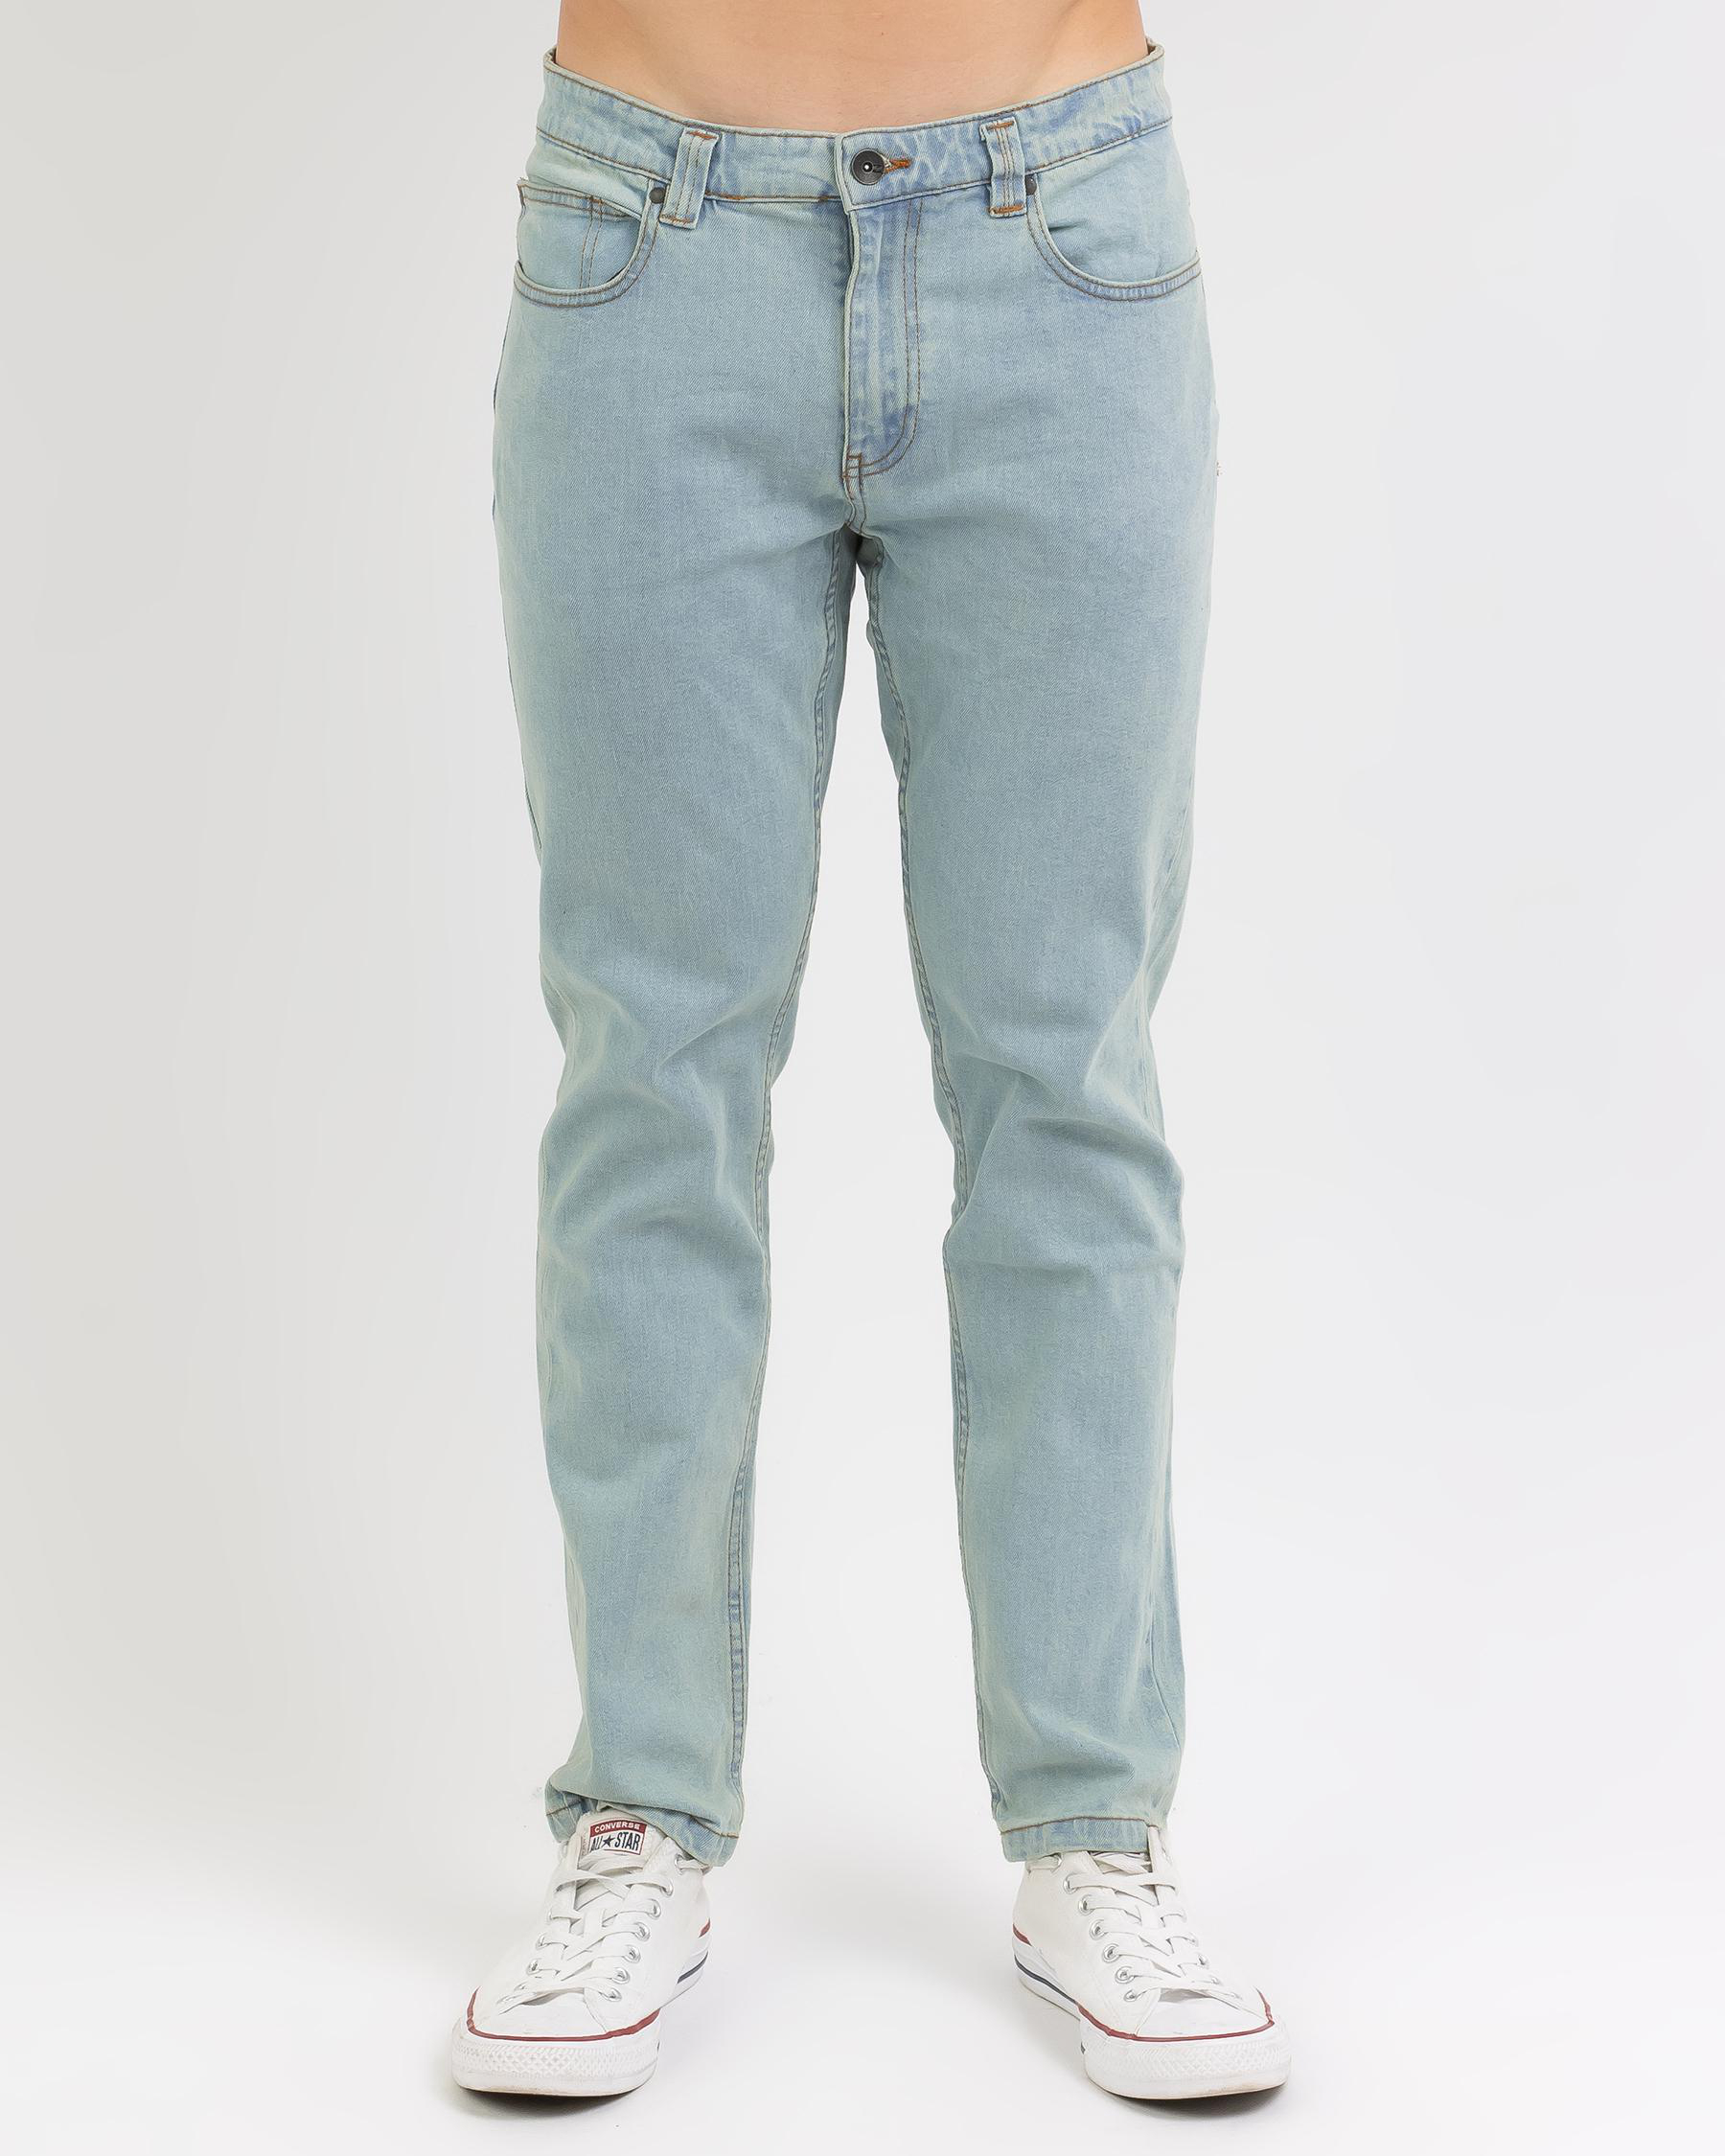 Billabong 73 Jeans In Indigo Overcast - Fast Shipping & Easy Returns ...